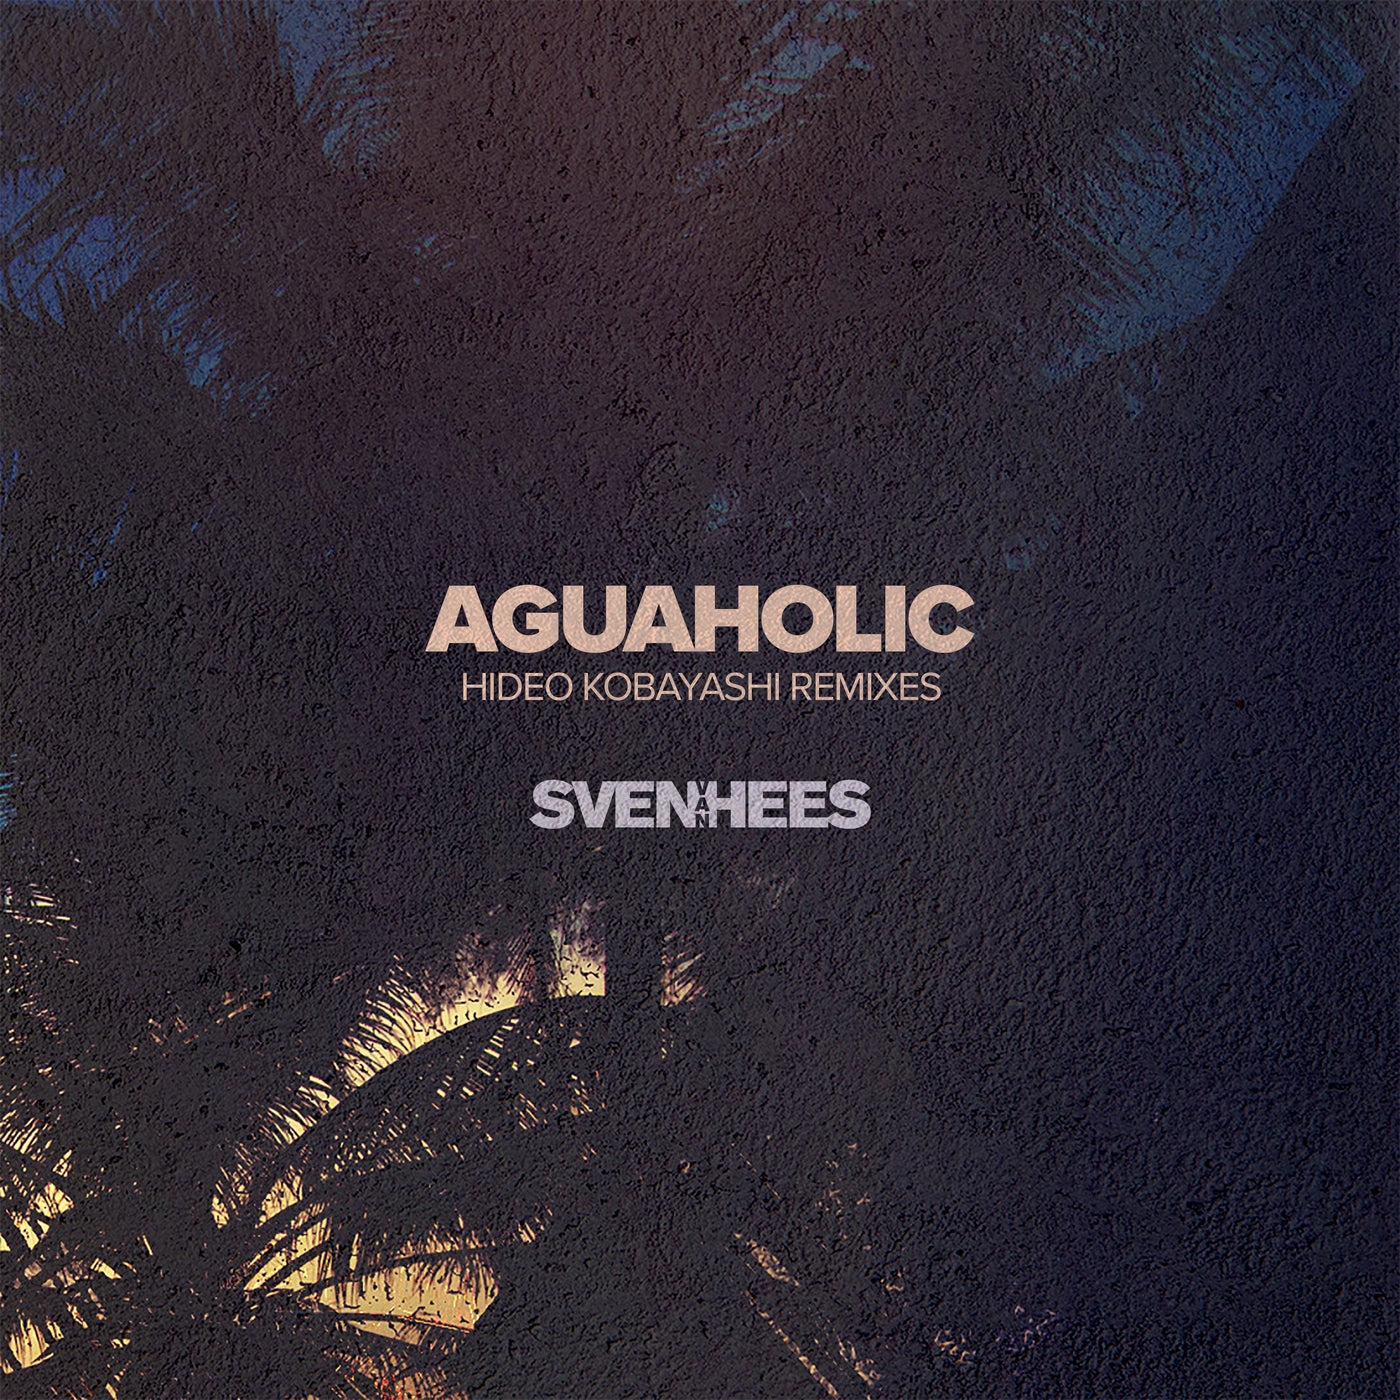 Aguaholic (Hideo Kobayashi Remixes)